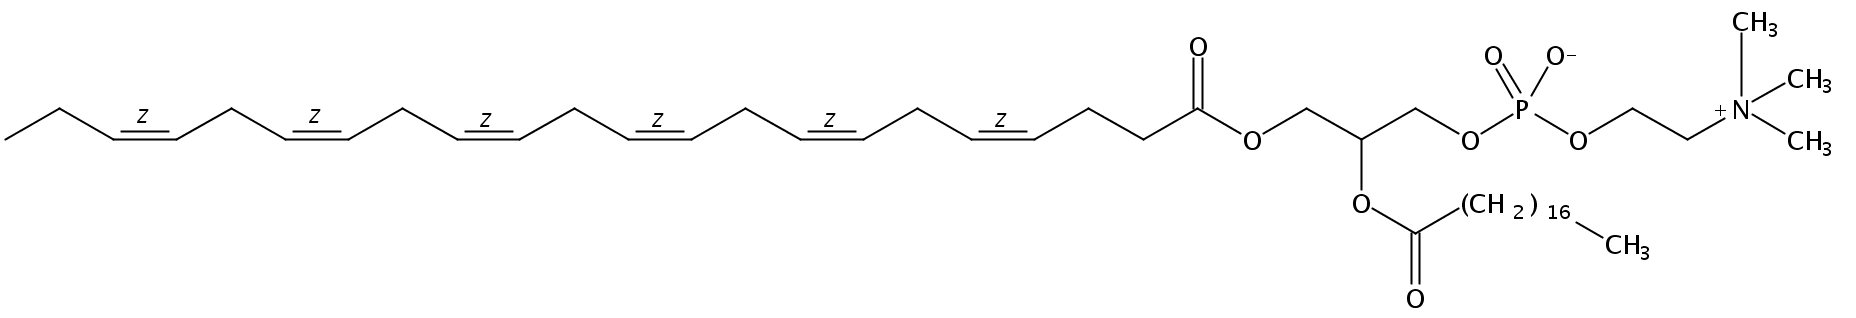 Structural formula of 1-Docosahexaenoyl-2-Stearoyl-sn-Glycero-3-Phosphatidylcholine